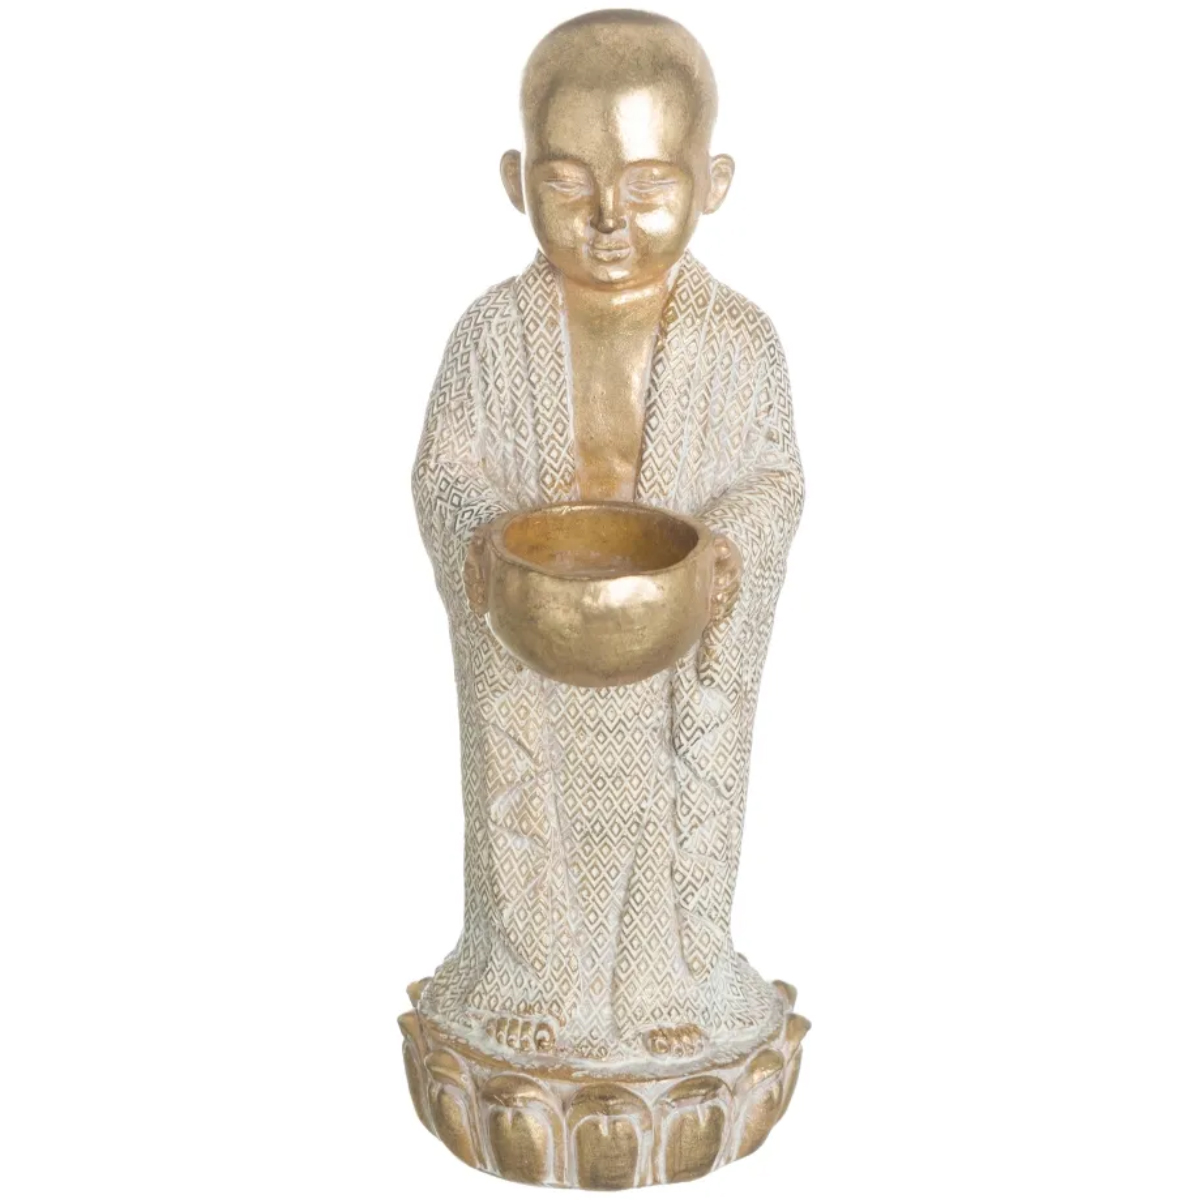 Figurine petit moine bouddhiste 35 cm